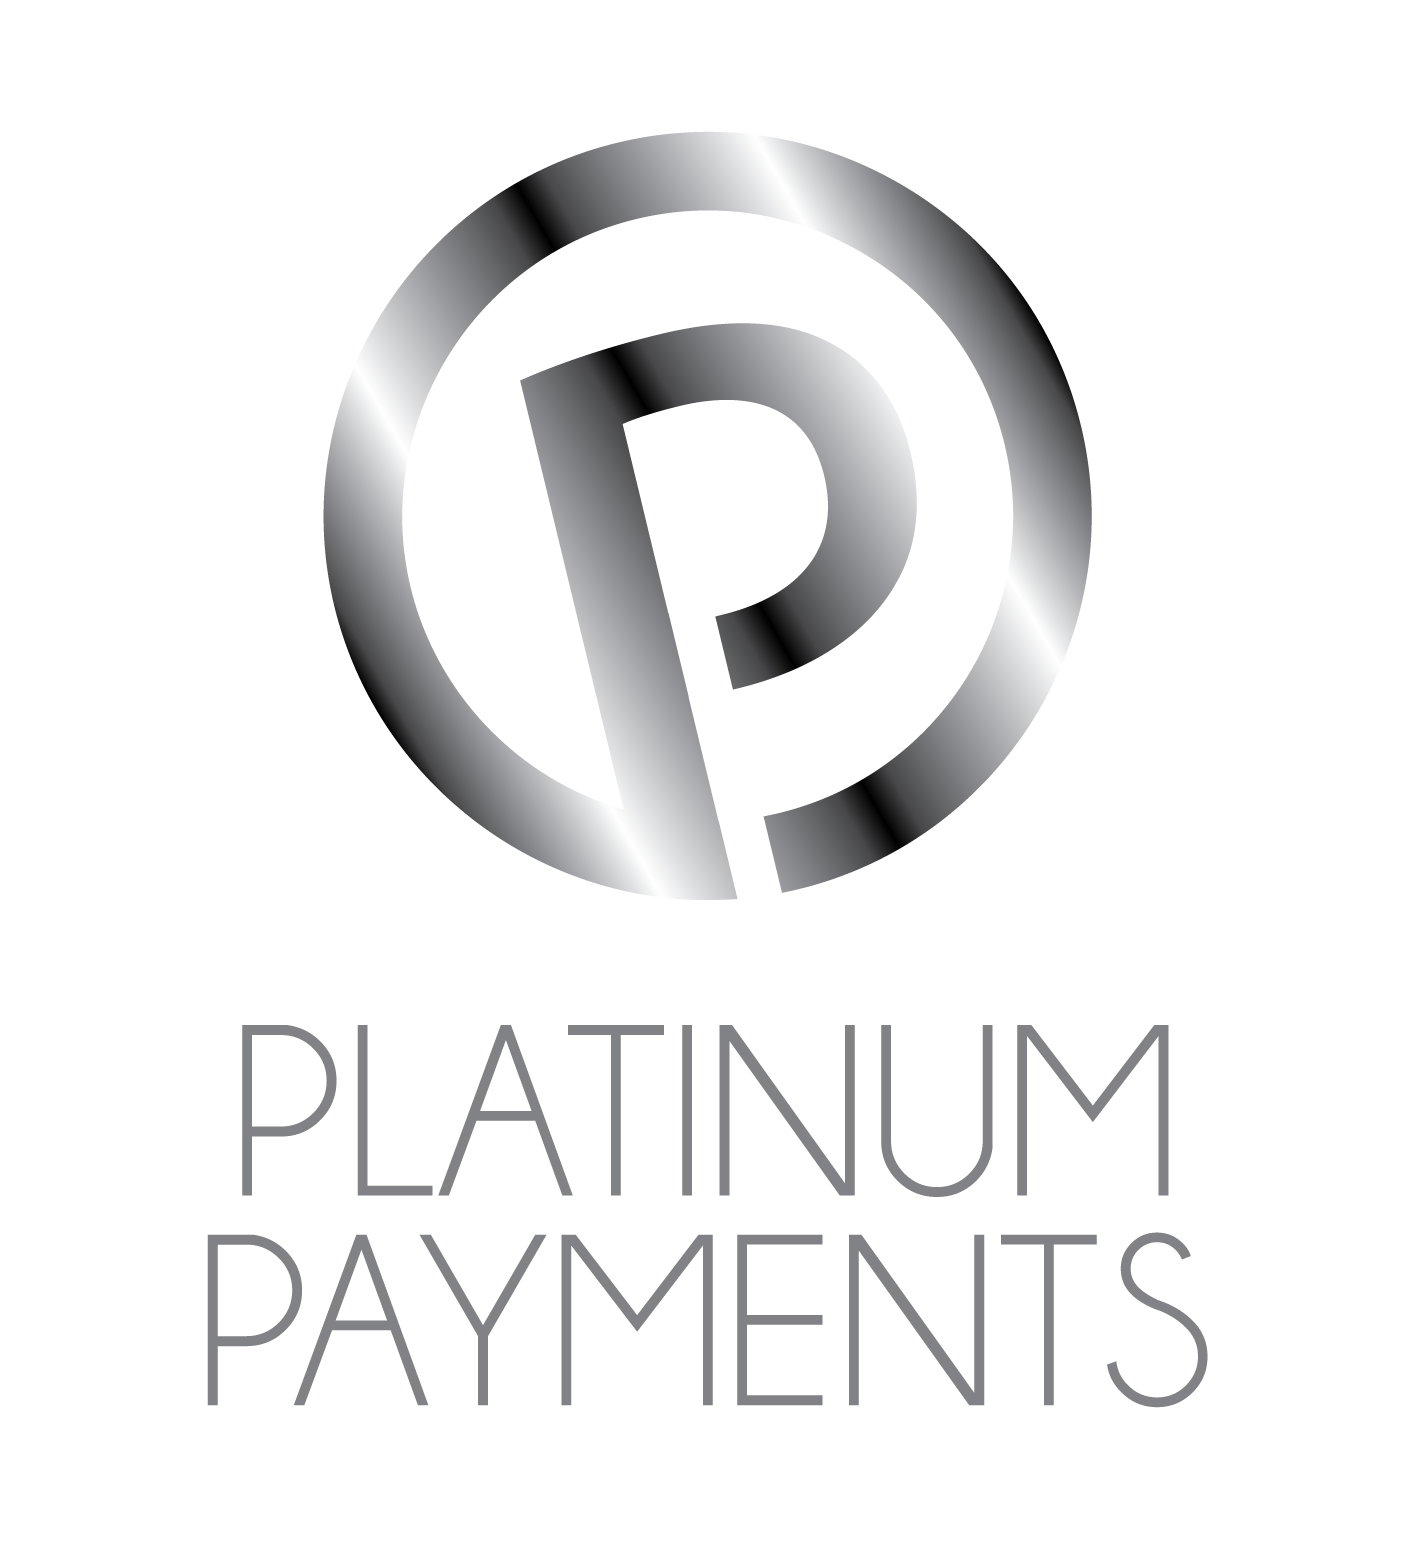 Platinum Payments